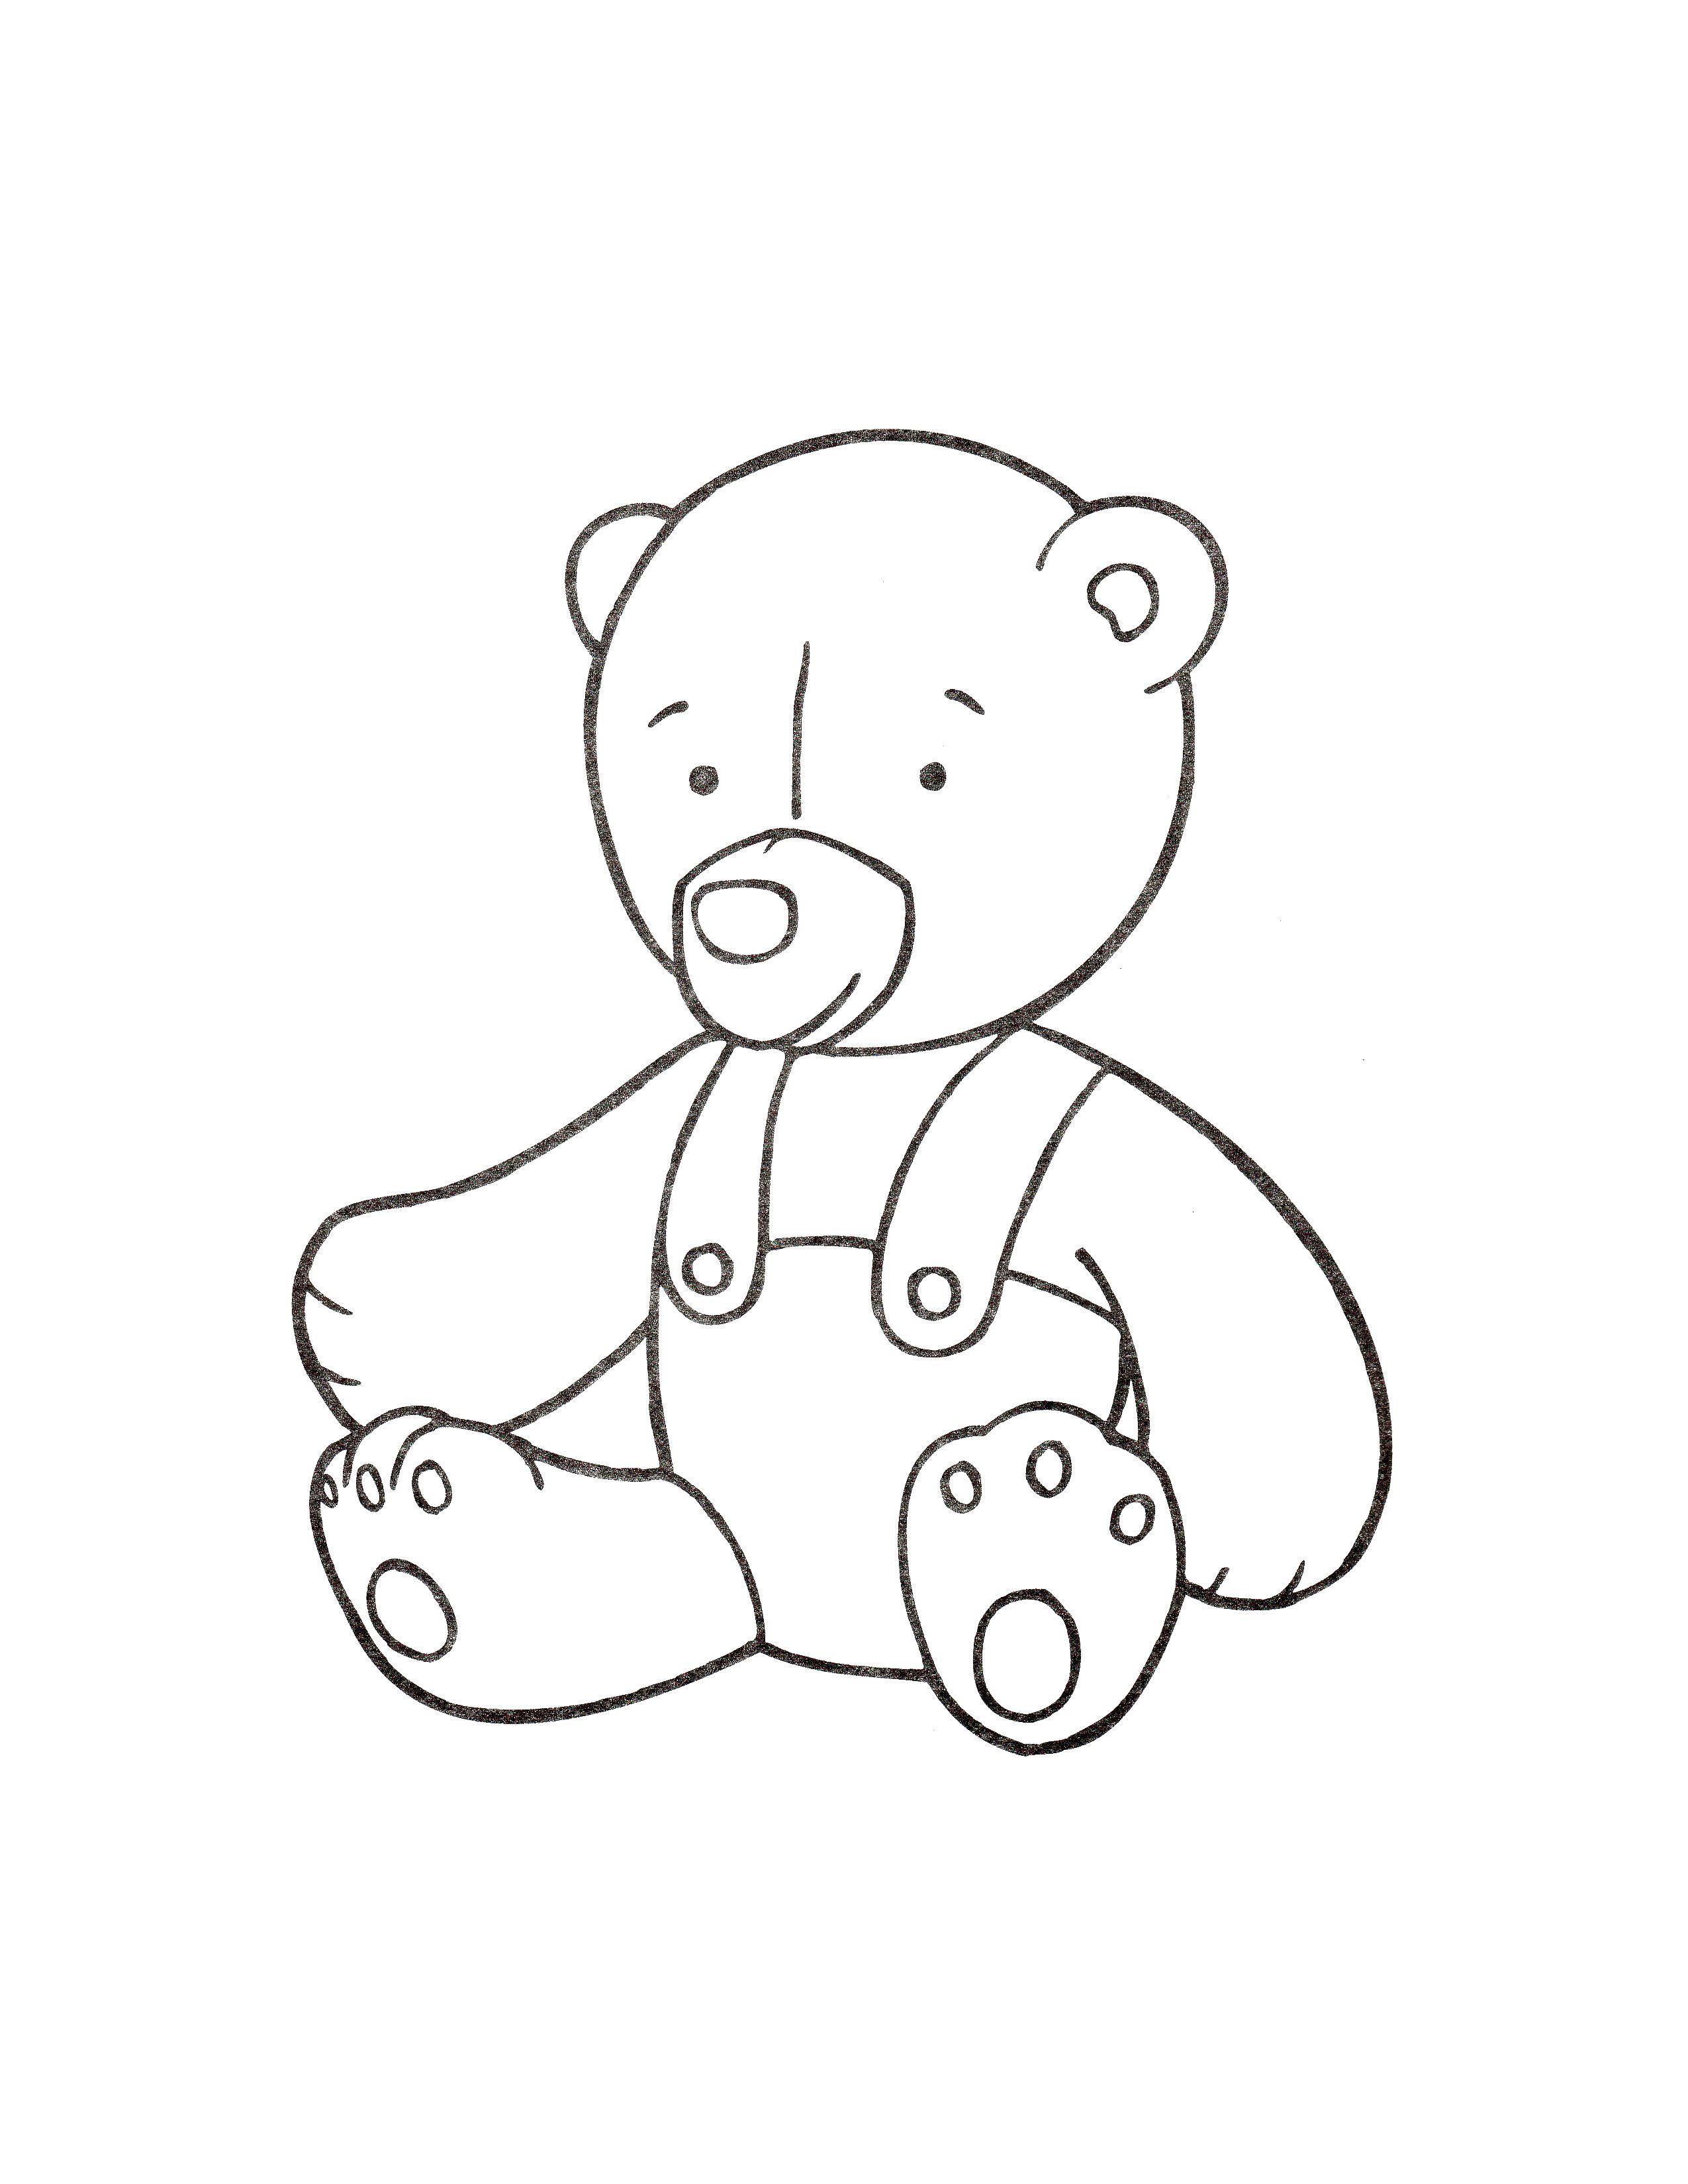 Раскраска игрушка картинка. Раскраска. Медвежонок. Мишка игрушка раскраска. Медвежонок раскраска для детей. Медвежонок игрушка раскраска.